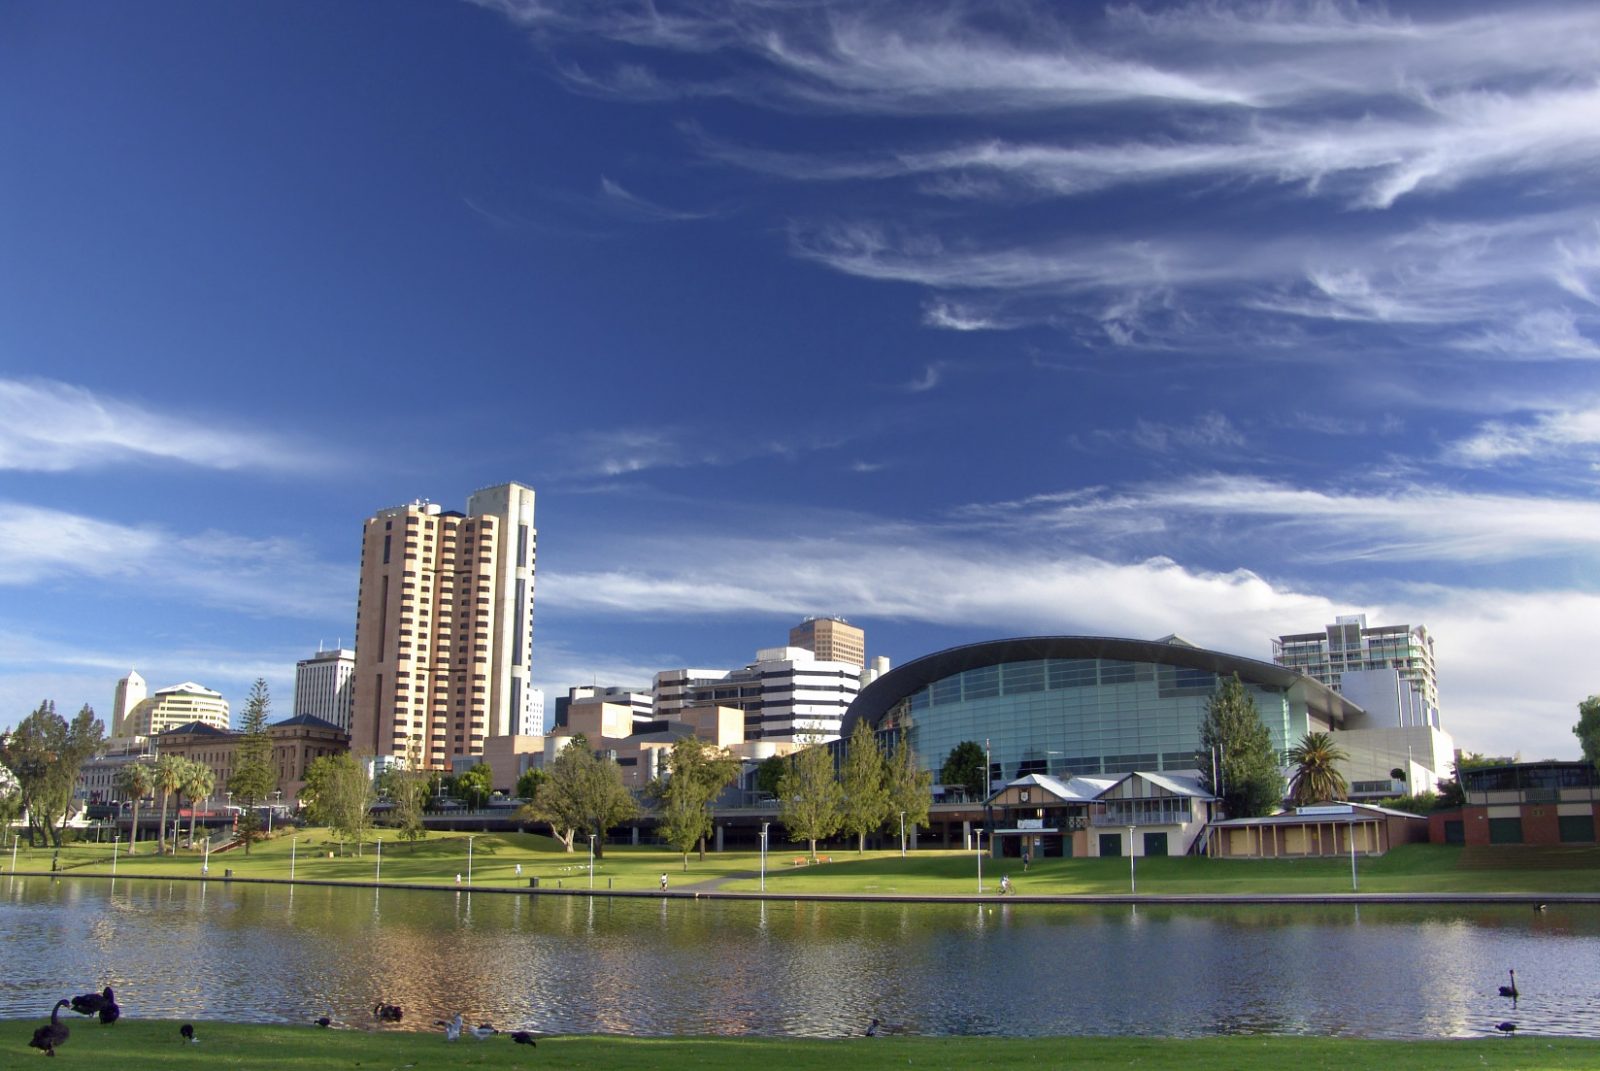 City of Adelaide. River Torrens. Australia. Photo via Working Adventures